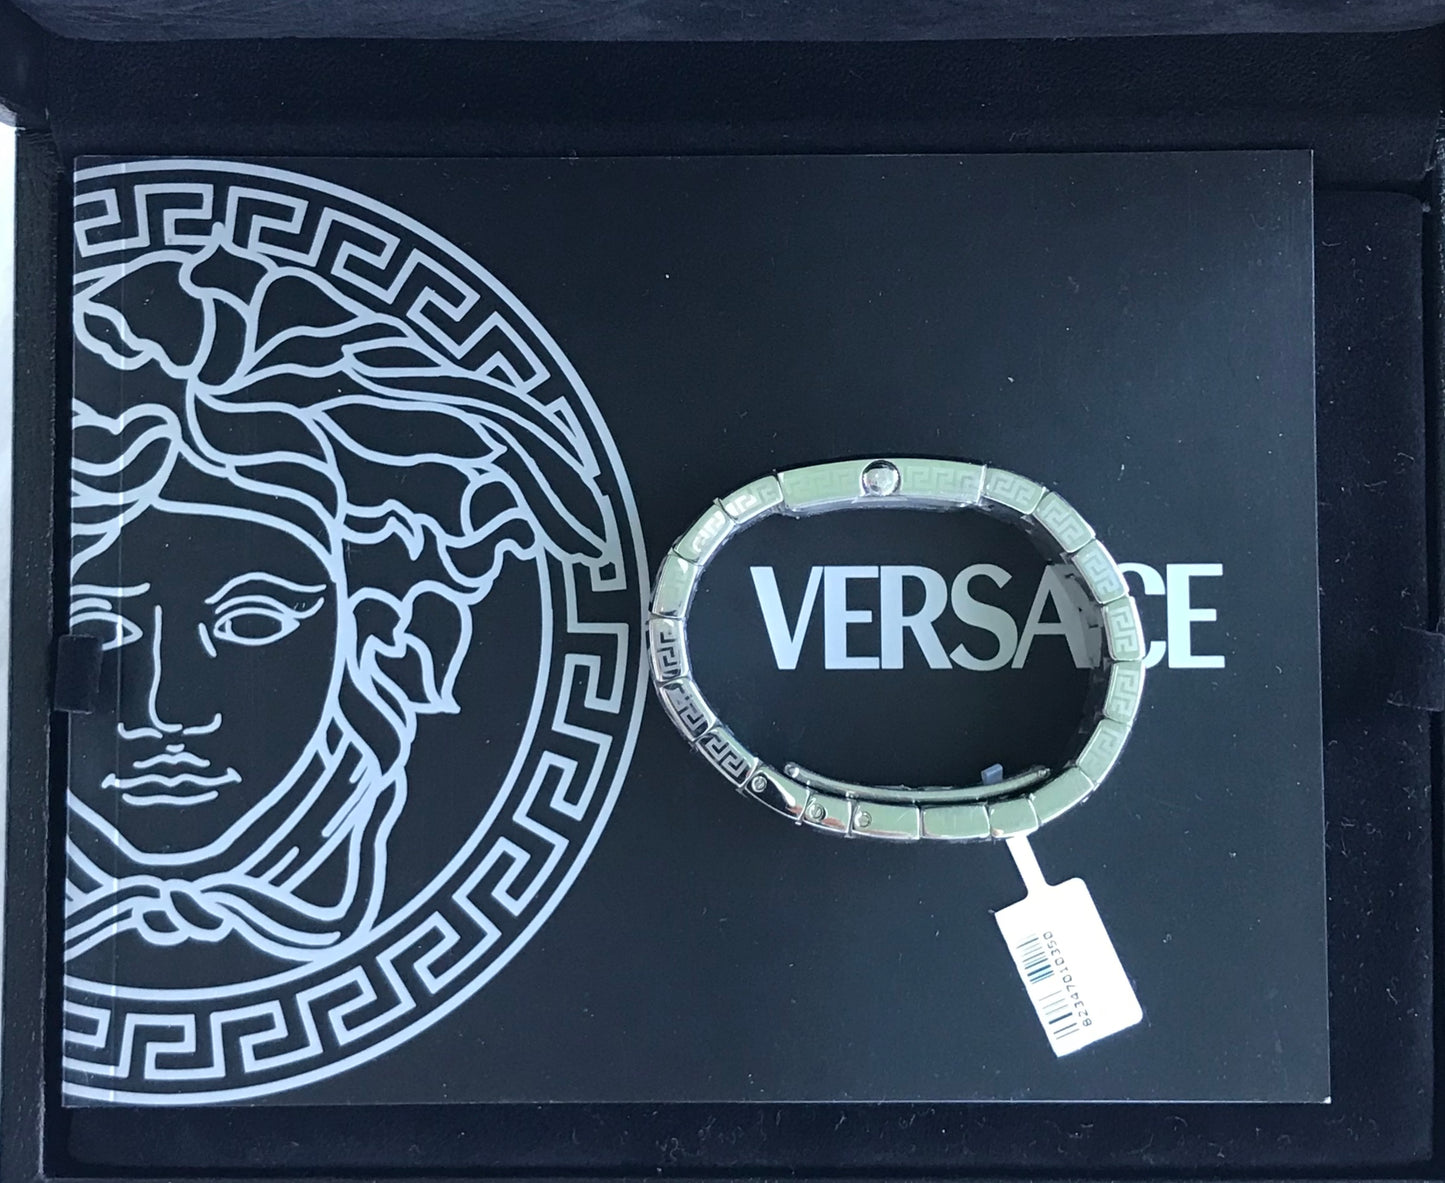 Gianni Versace Ladies Medusa Watch